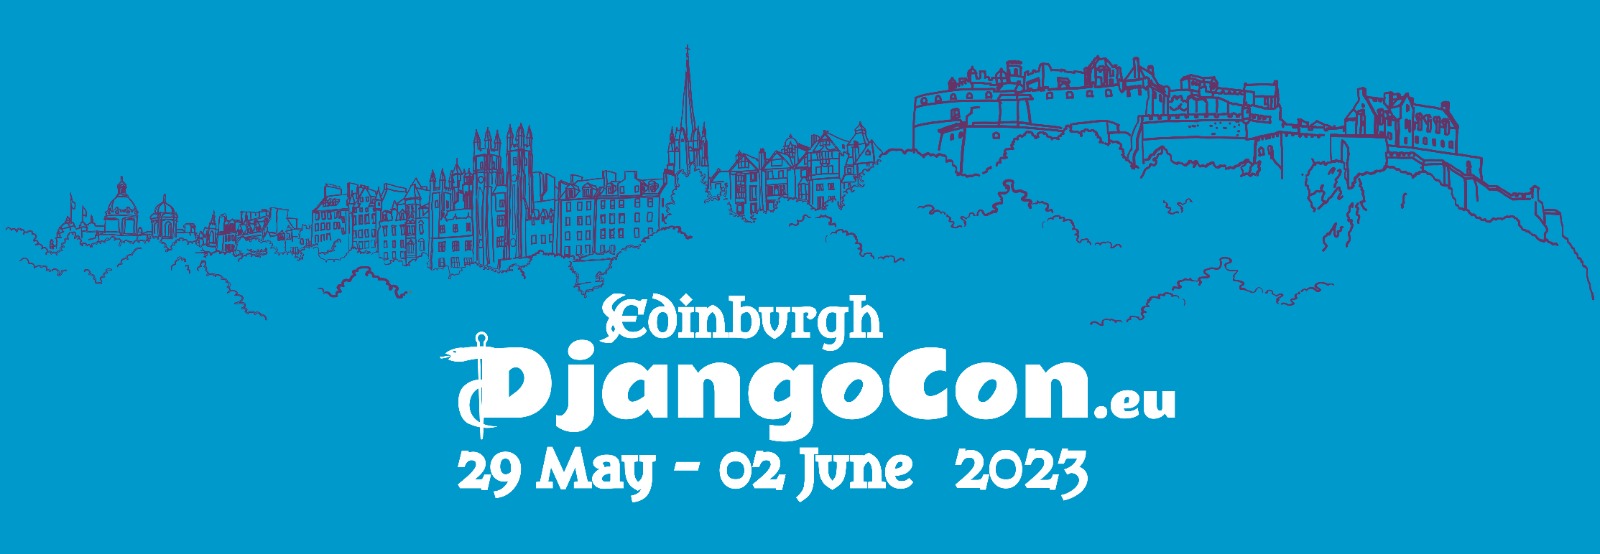 DjangoCon Europe 2023